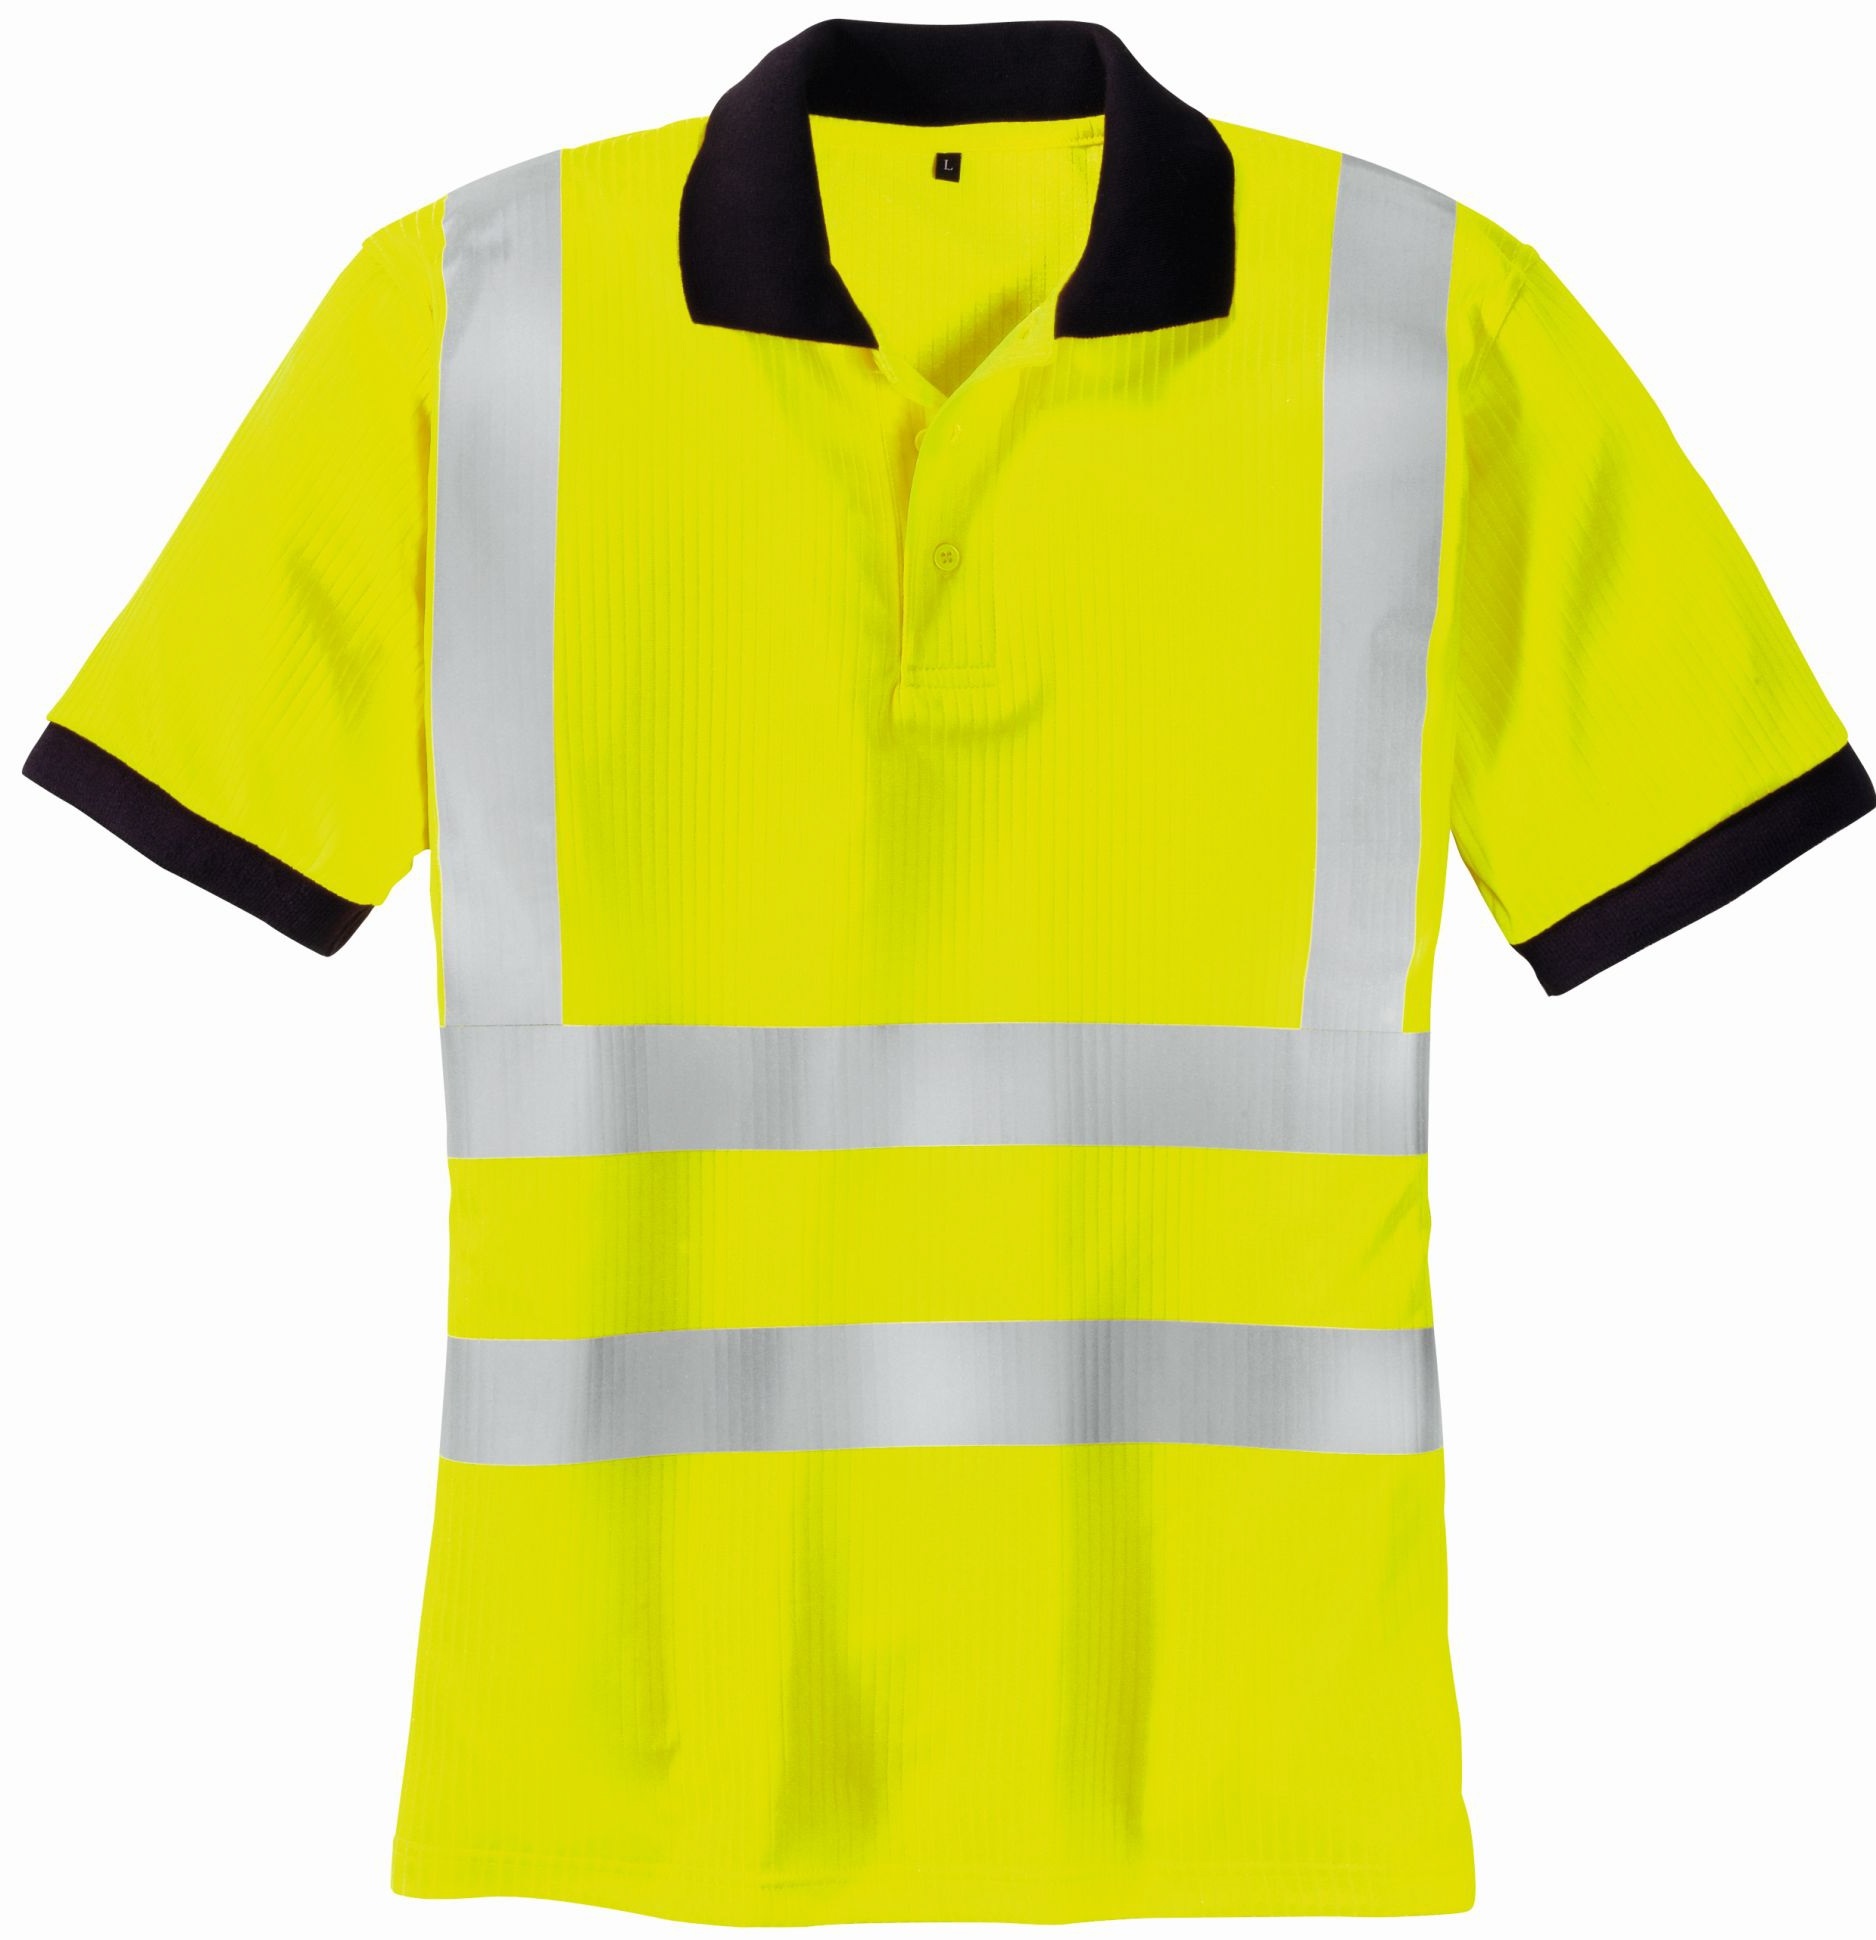 BIG-TEXXOR-Warnschutz, Warn-Polo-Shirt, Sylt, leuchtgelb